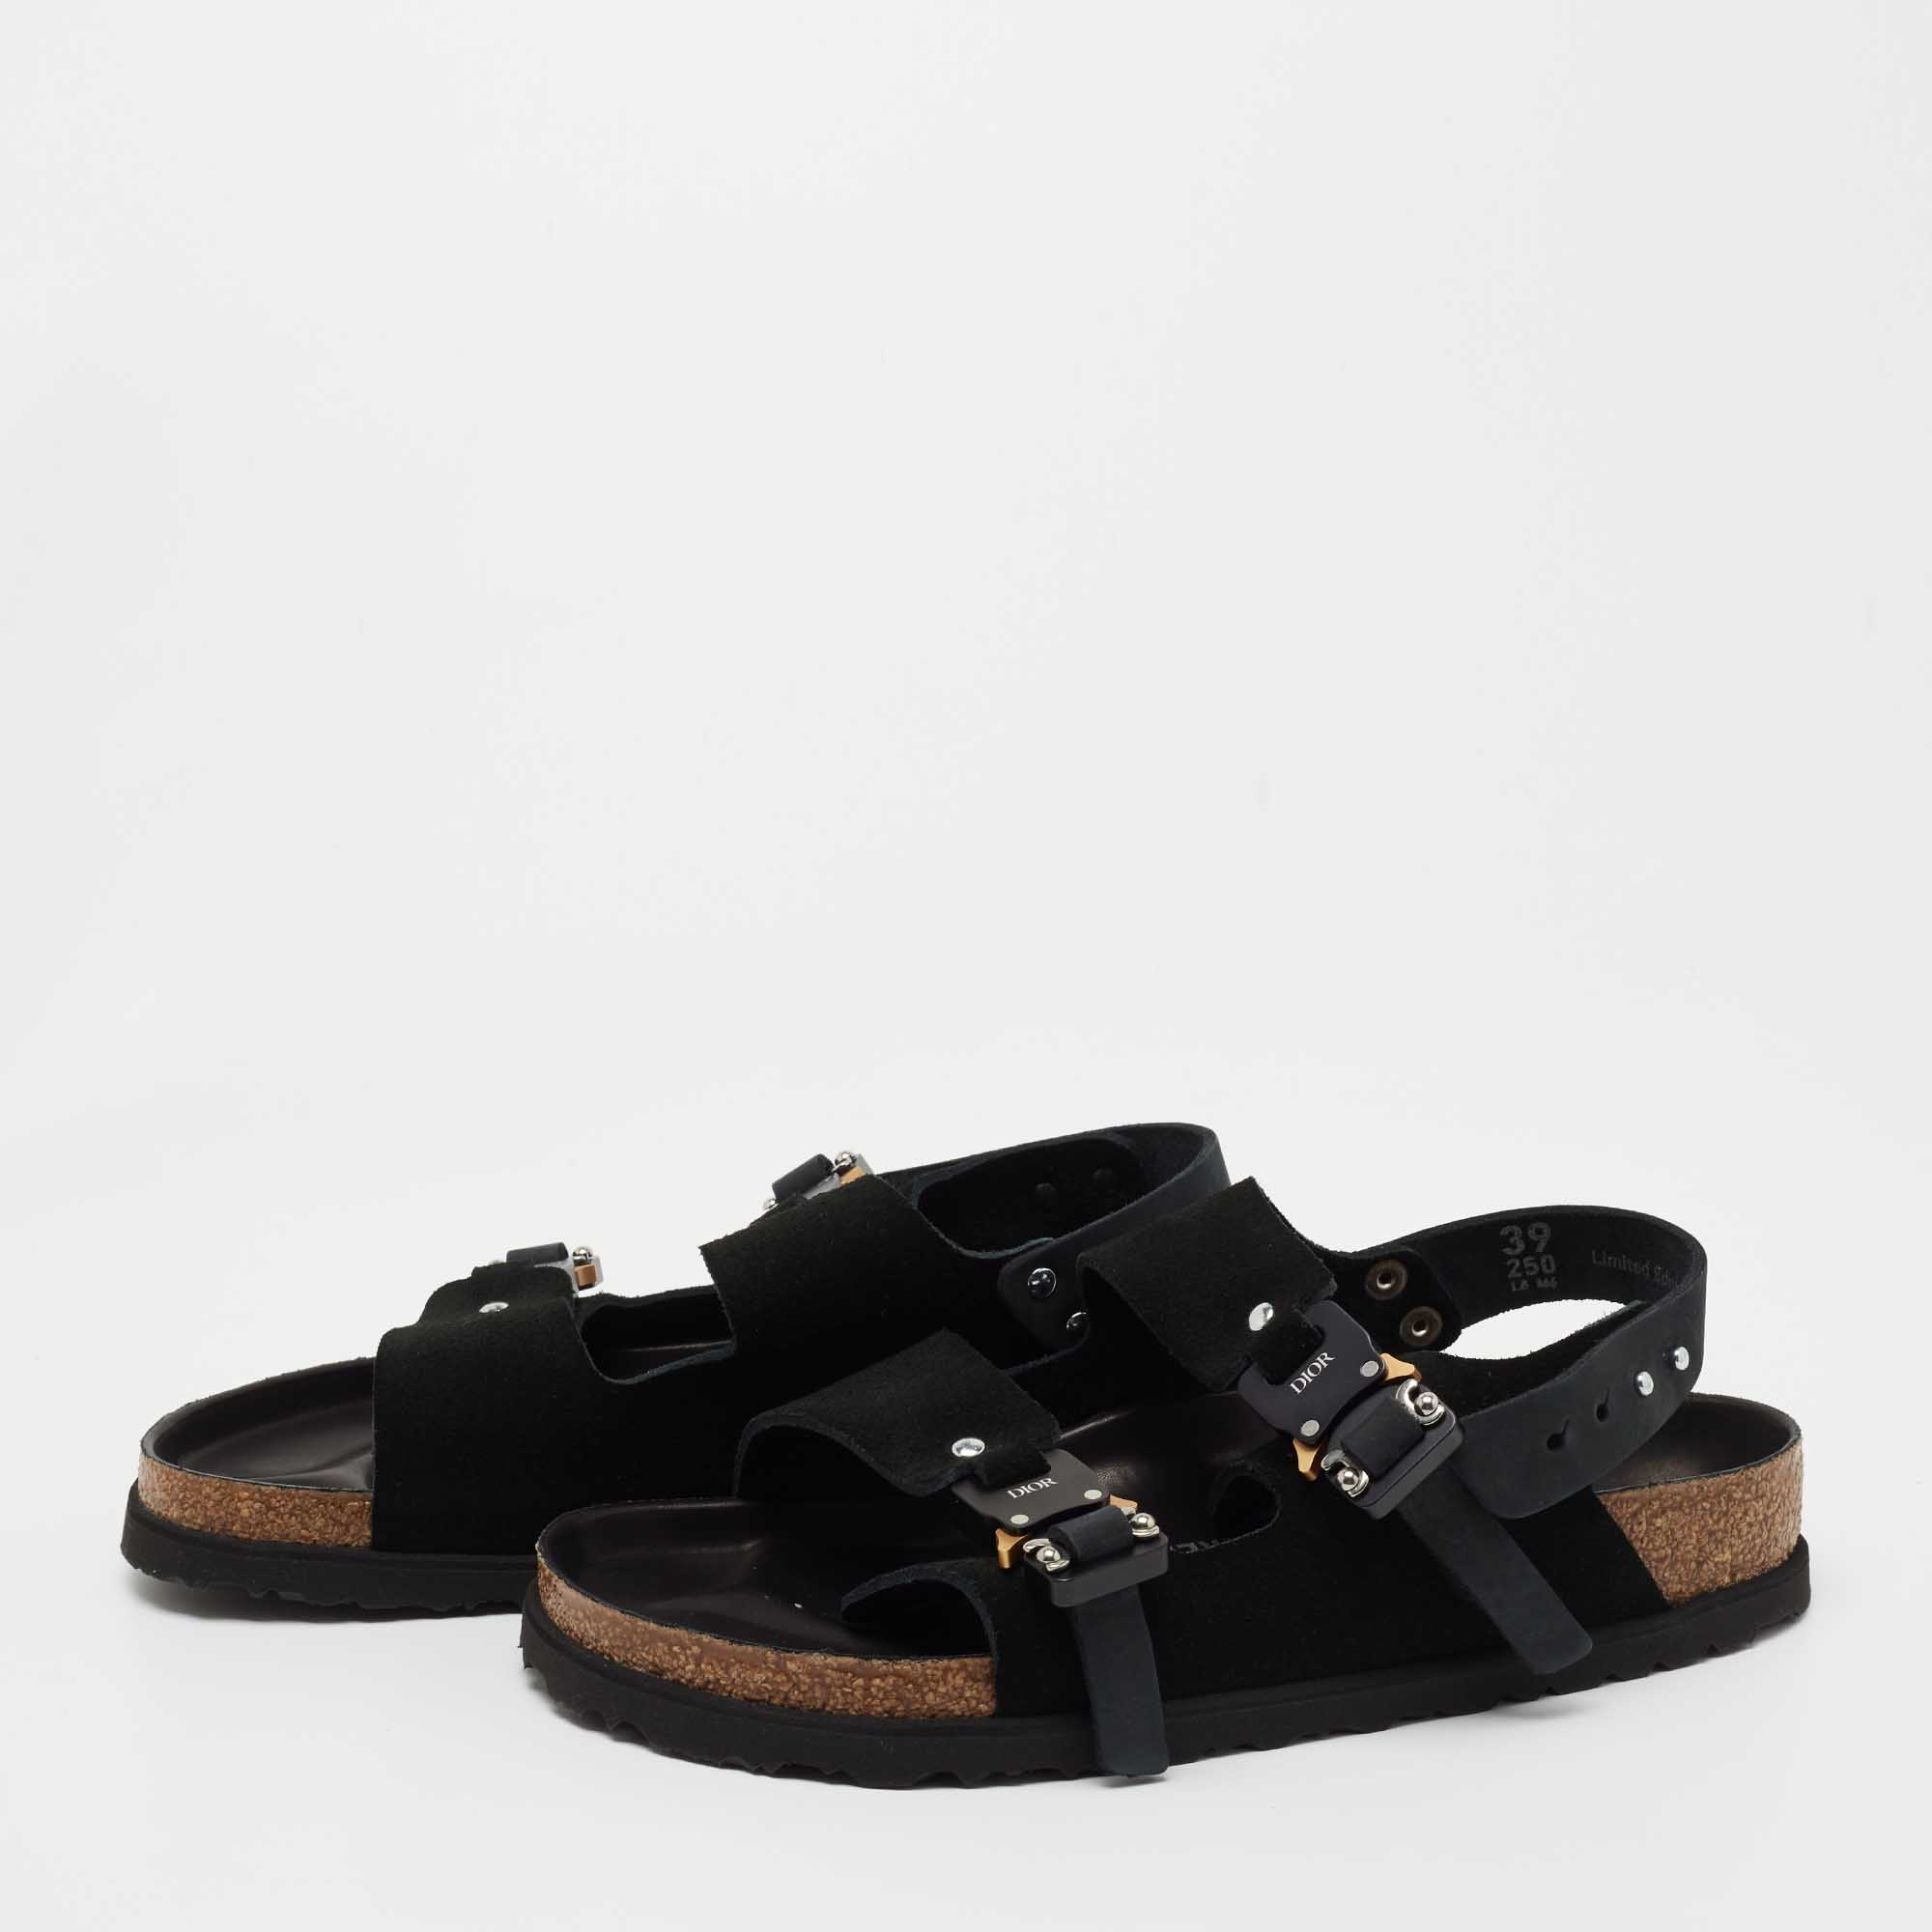 

Dior x Birkenstock Black Suede Milano Slingback Sandals Size